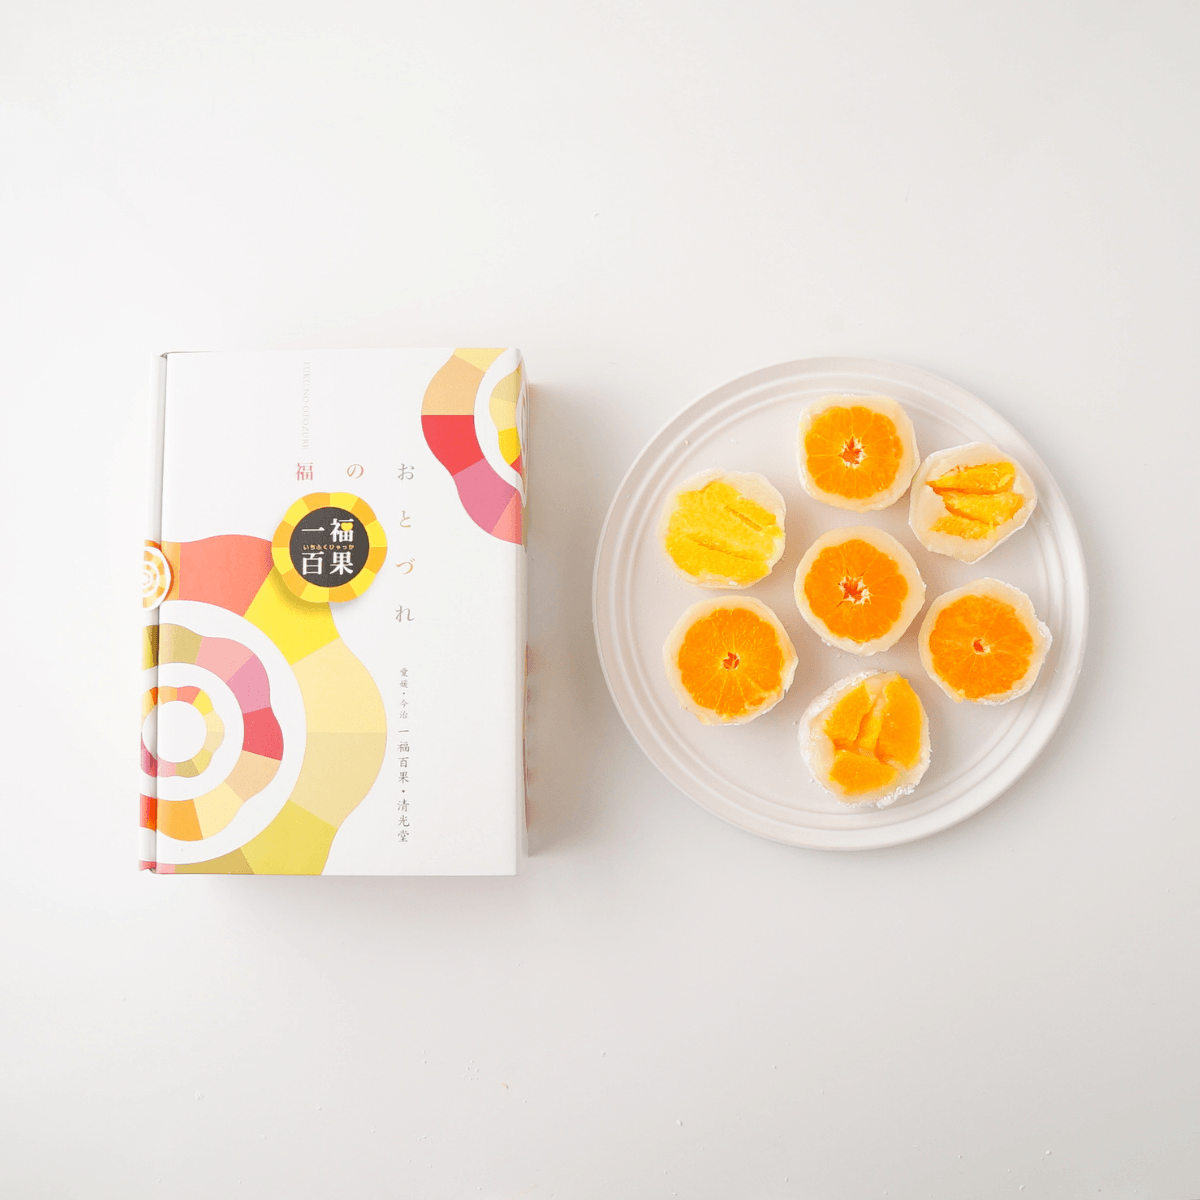 Cake.jp Whole Ehime Mikan Orange Daifuku - Tokyo Fresh Direct